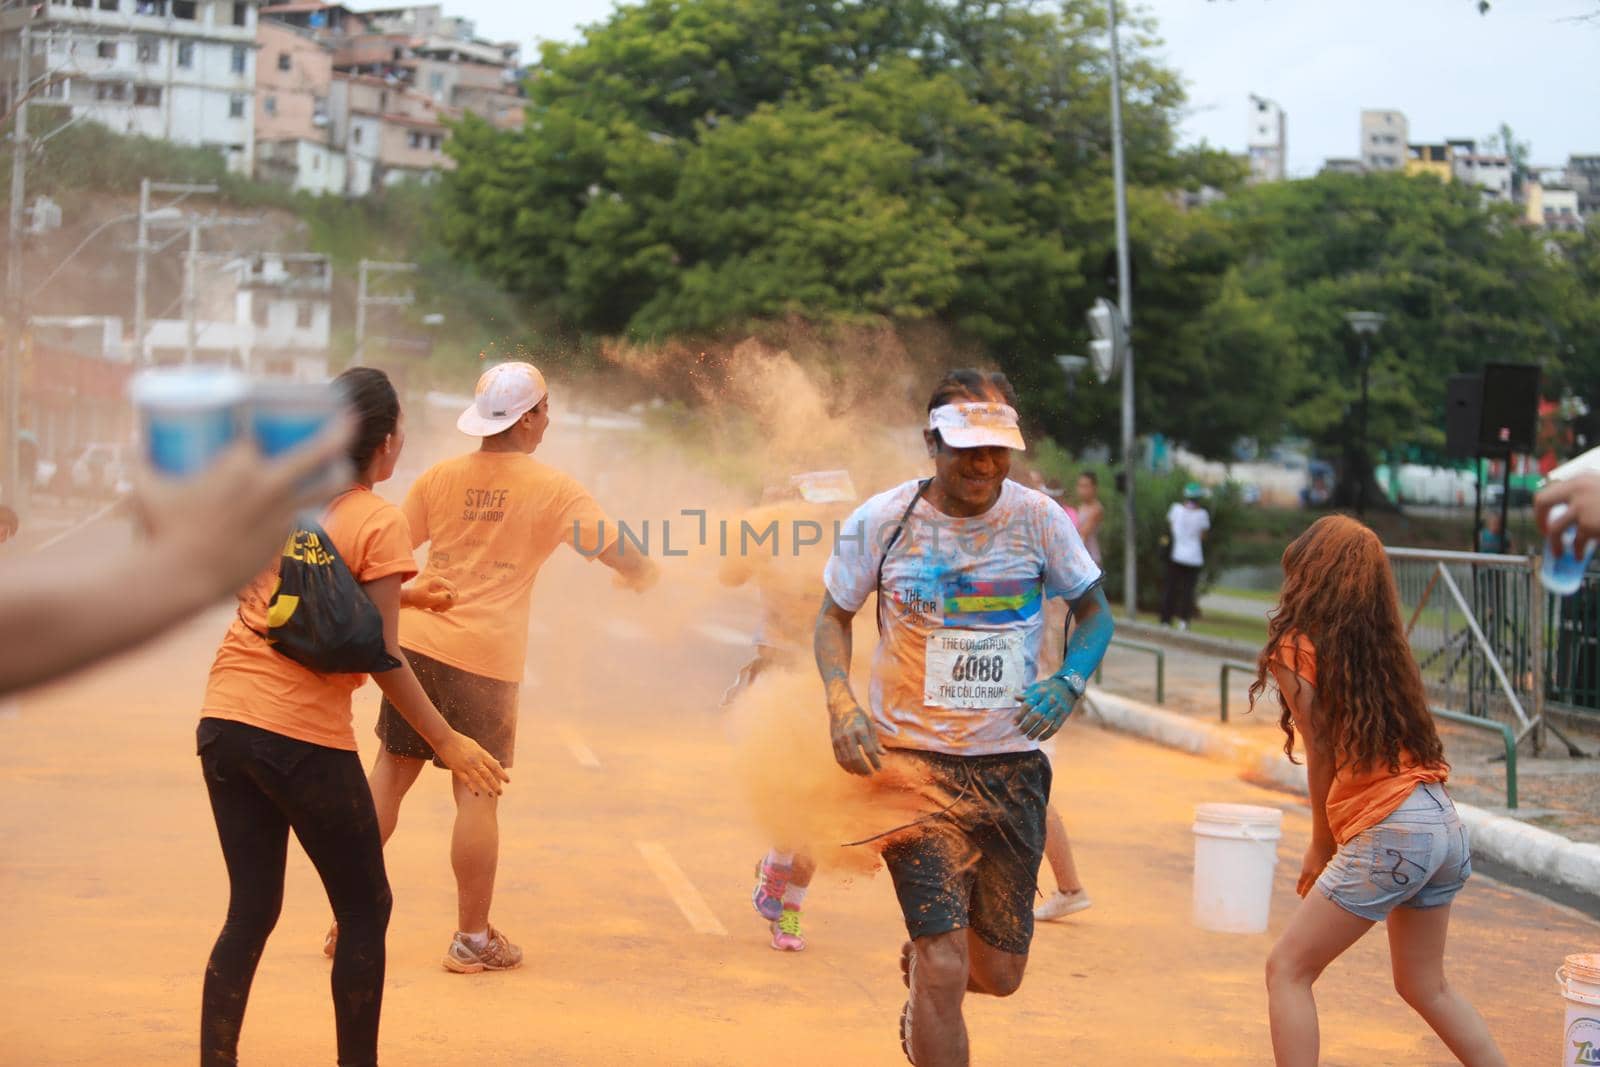 salvador, bahia, brazil - march 22, 2015: participant of the street race The Color Run at Dique de Torroro in the city of Salvador.